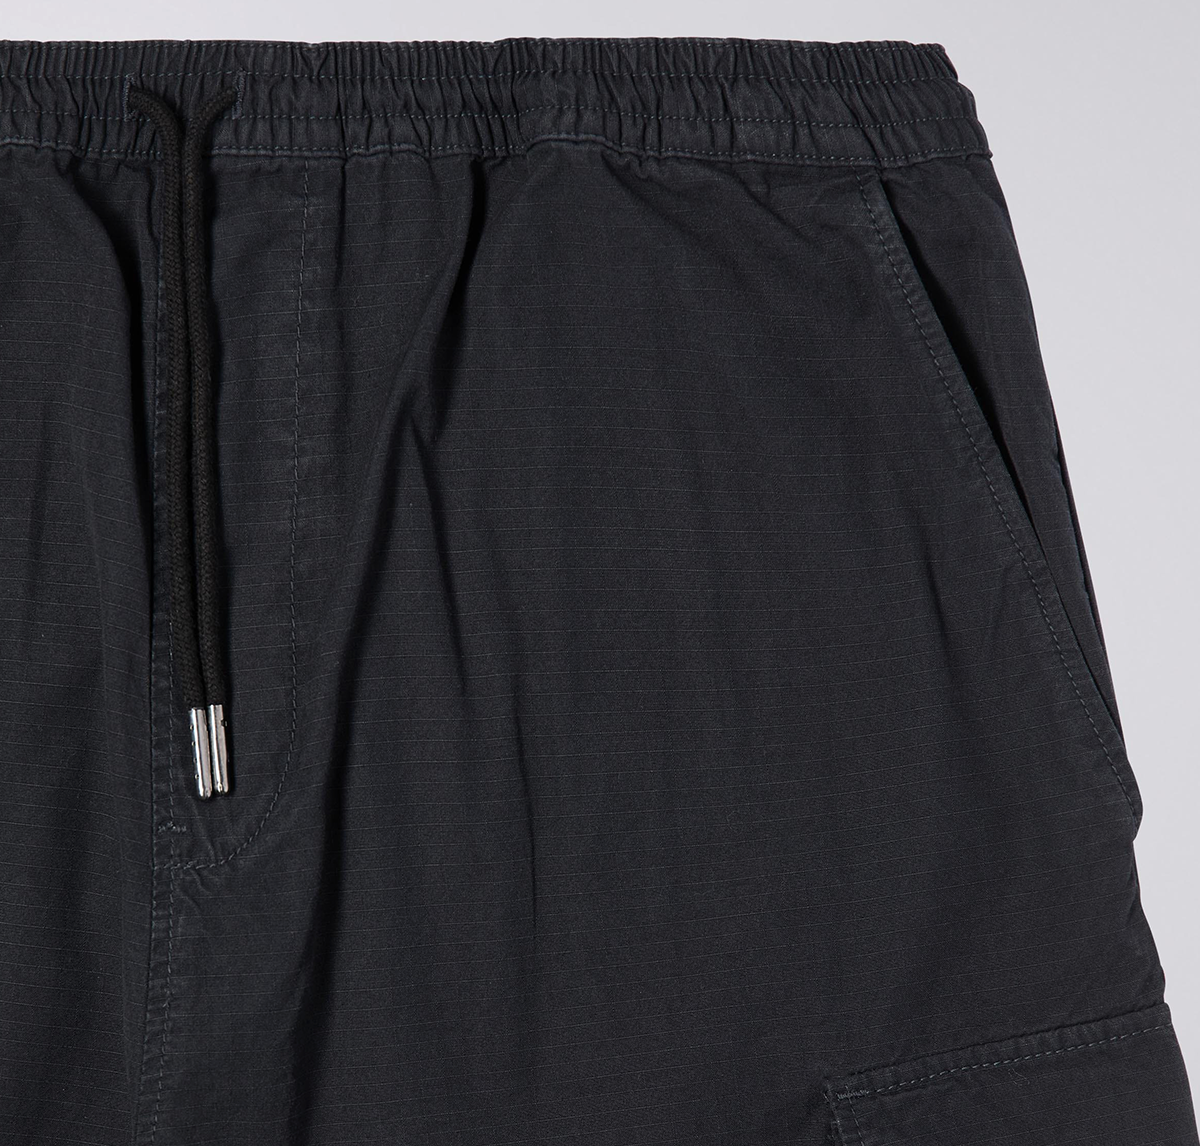 EDWIN Squad Pant - Rip Stop - Black Garment Dyed front detail